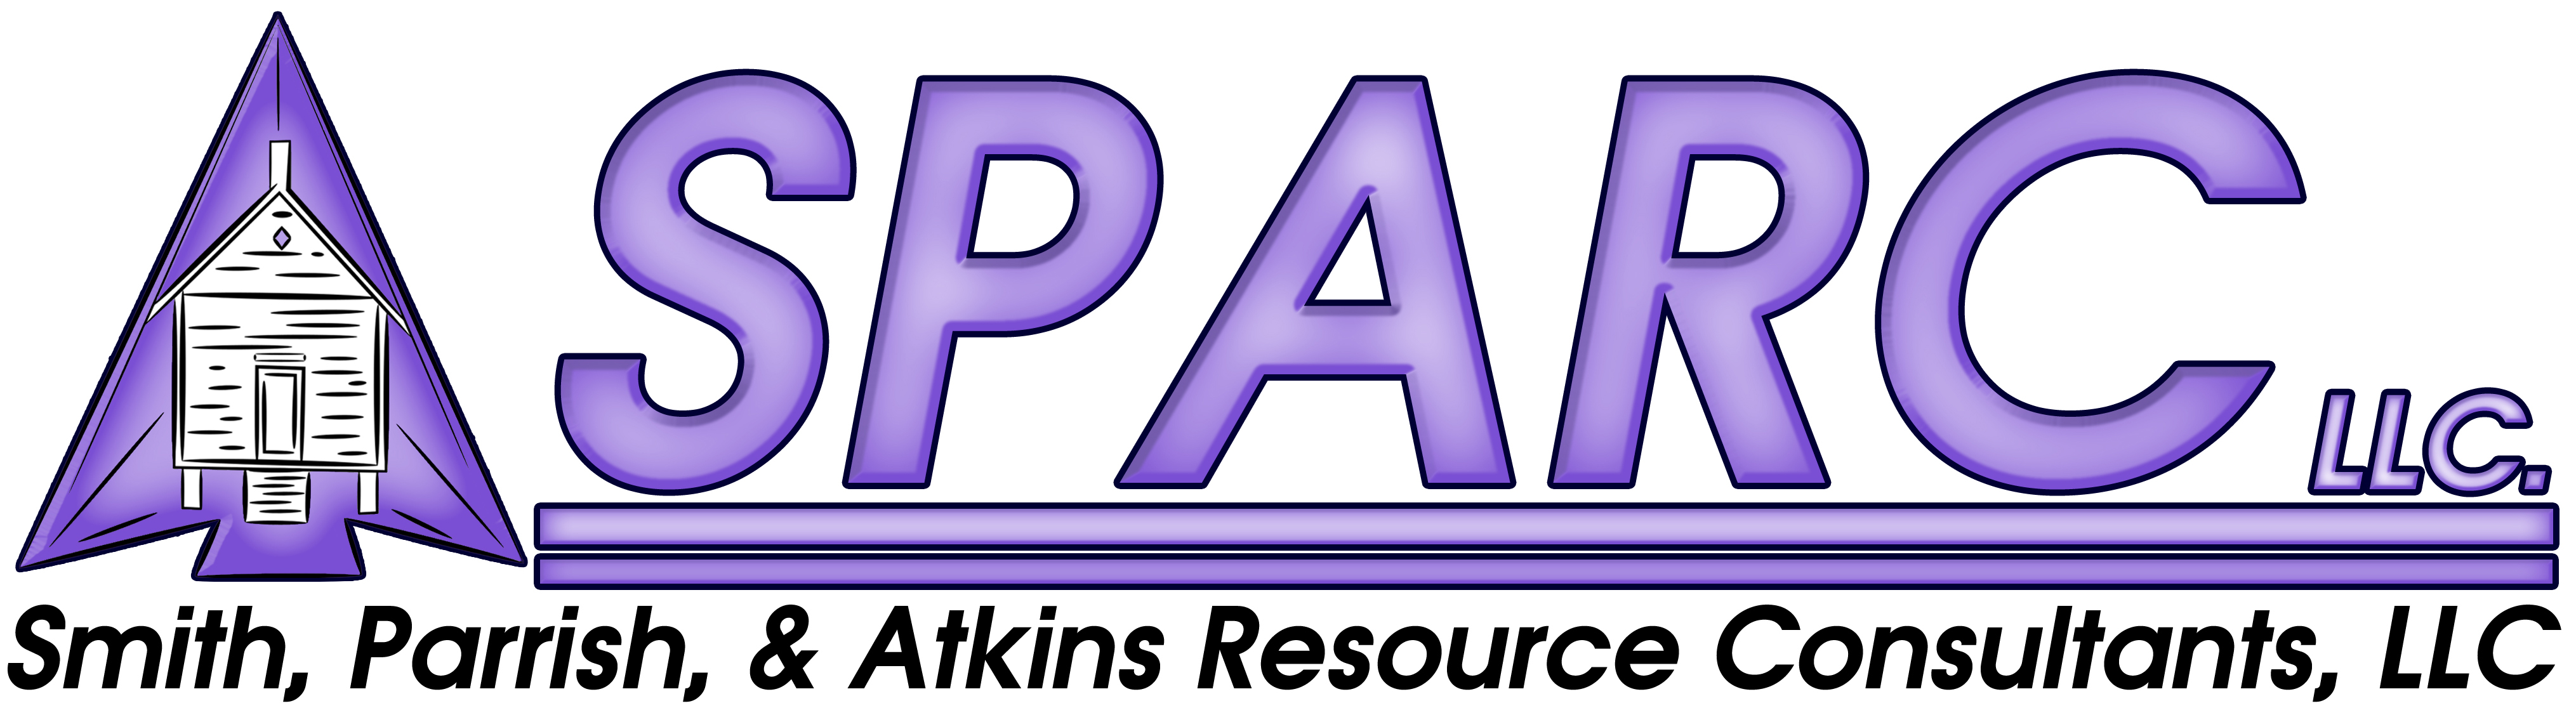 Smith, Parrish, & Atkins Resource Consultants, LLC